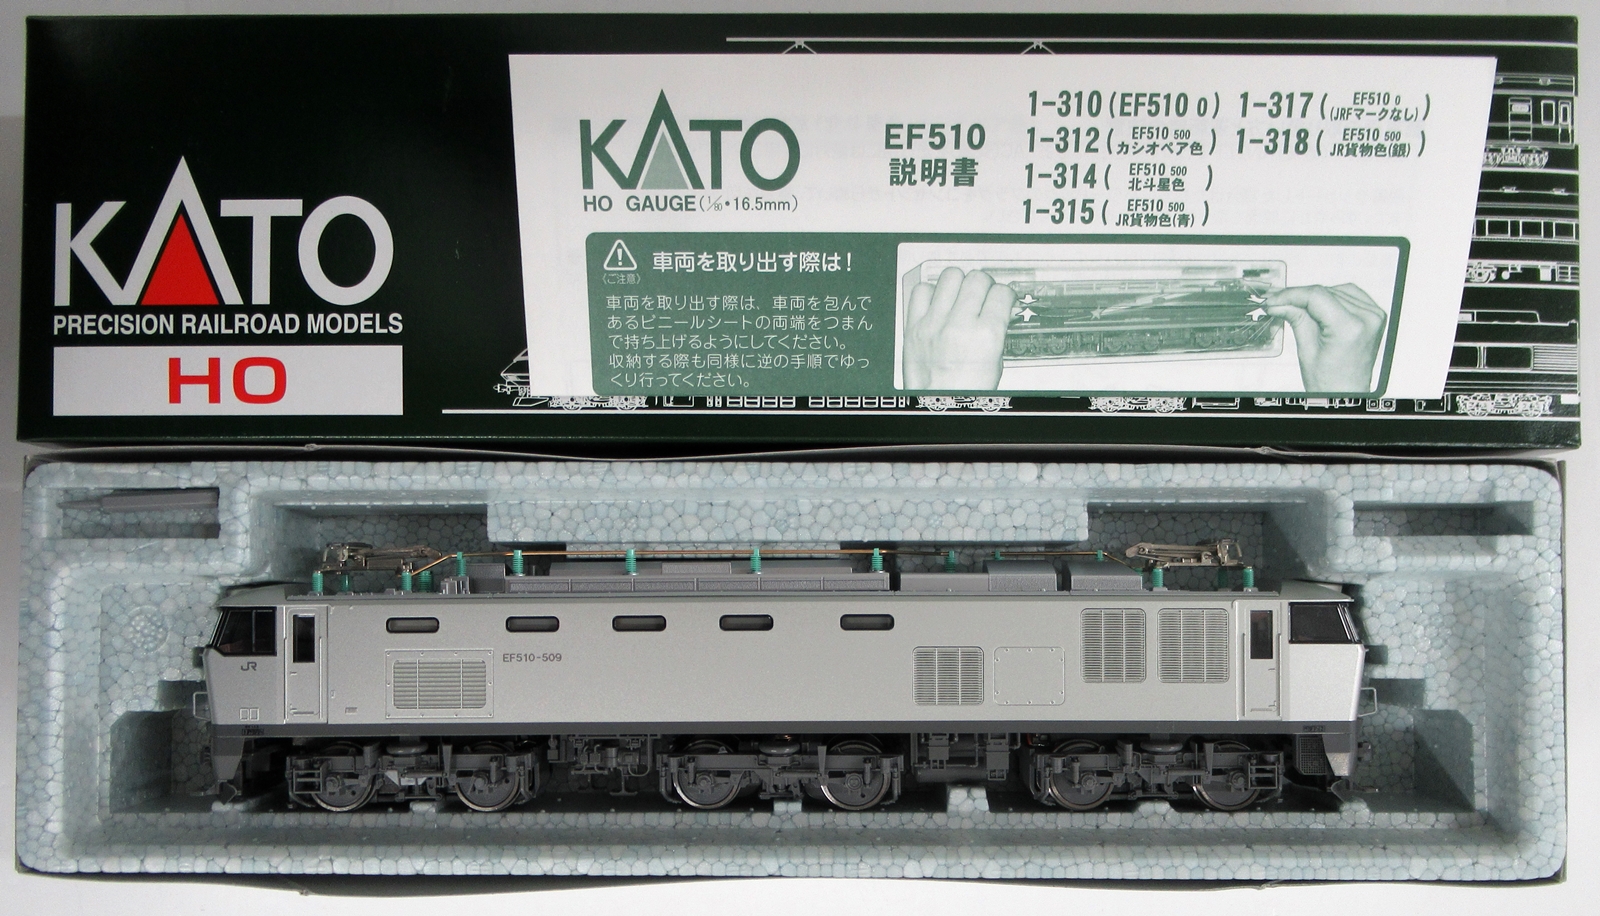 HOゲージ KATO 1-318 EF510 500 JR貨物